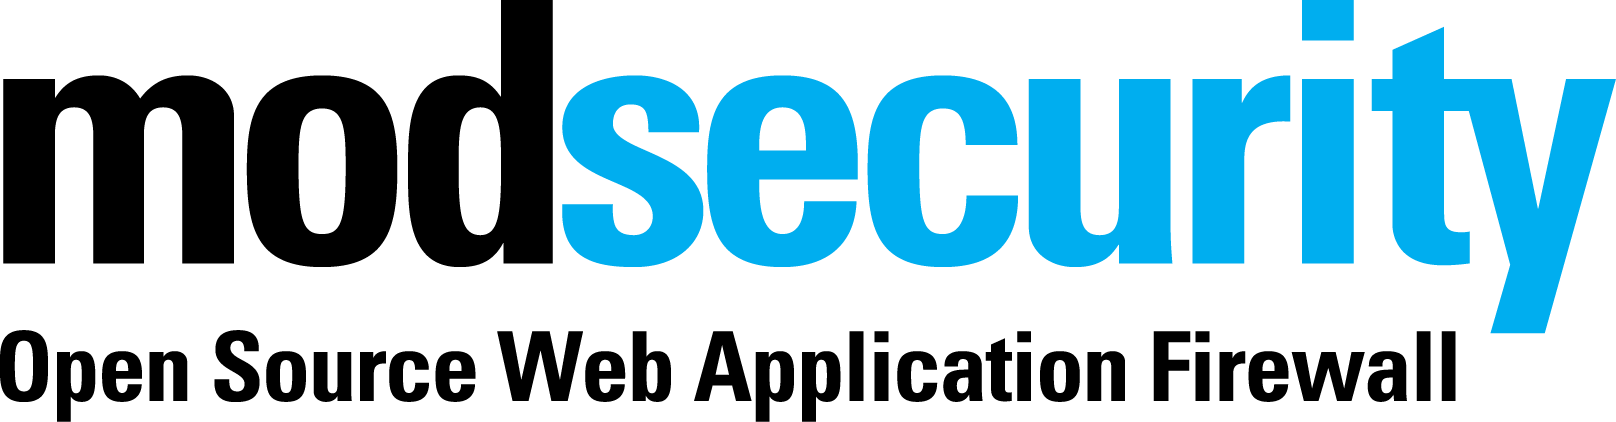 modsecurity logo